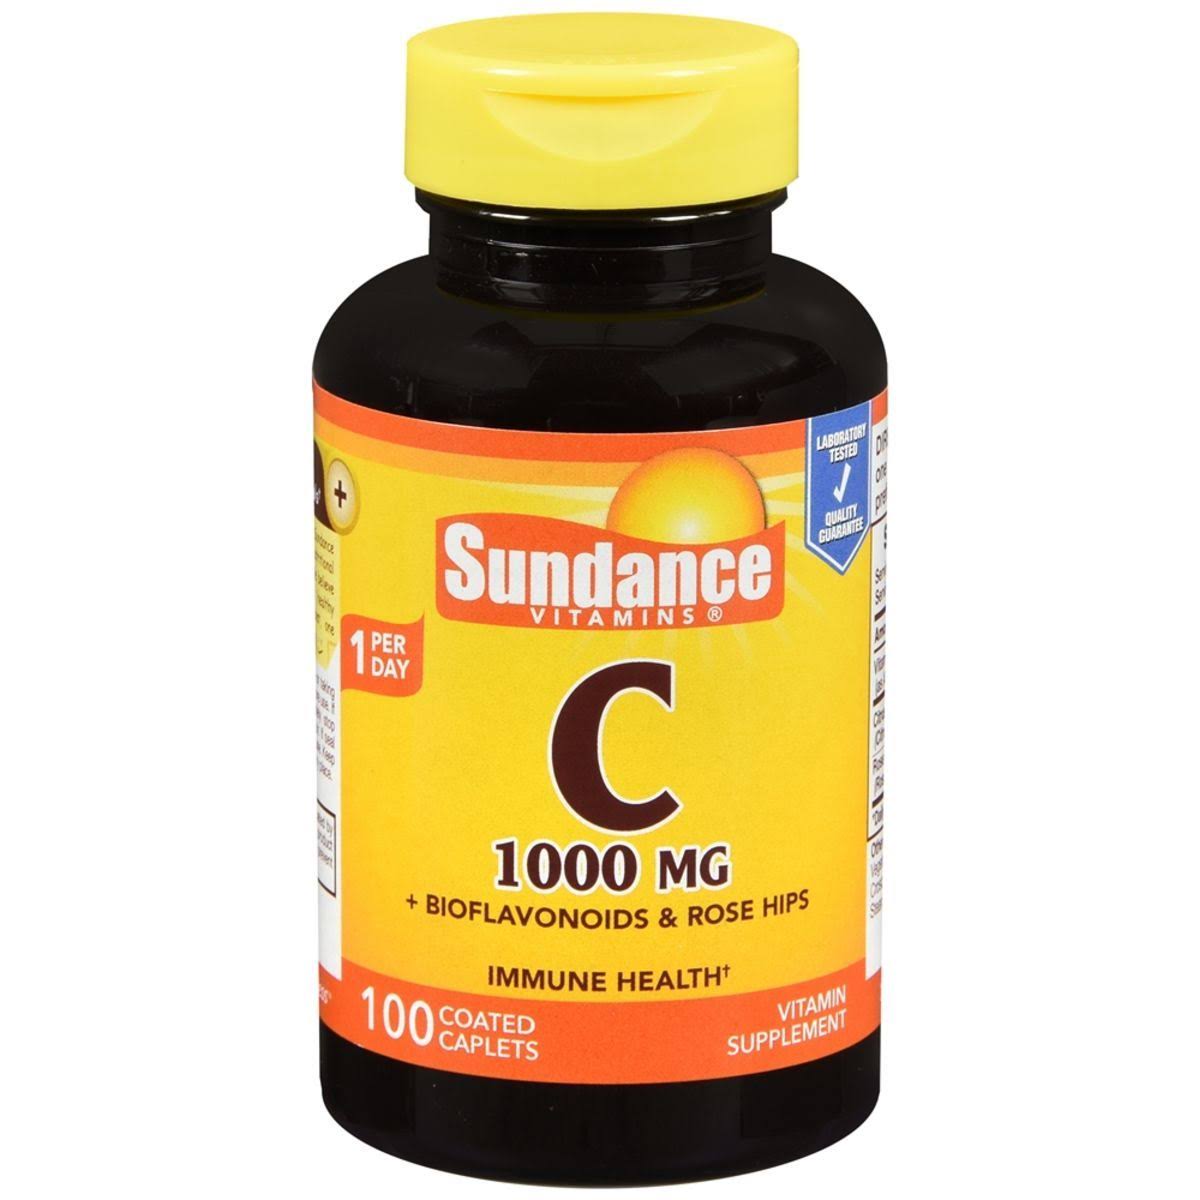 Sundance Vitamin C - 1000mg, 100ct